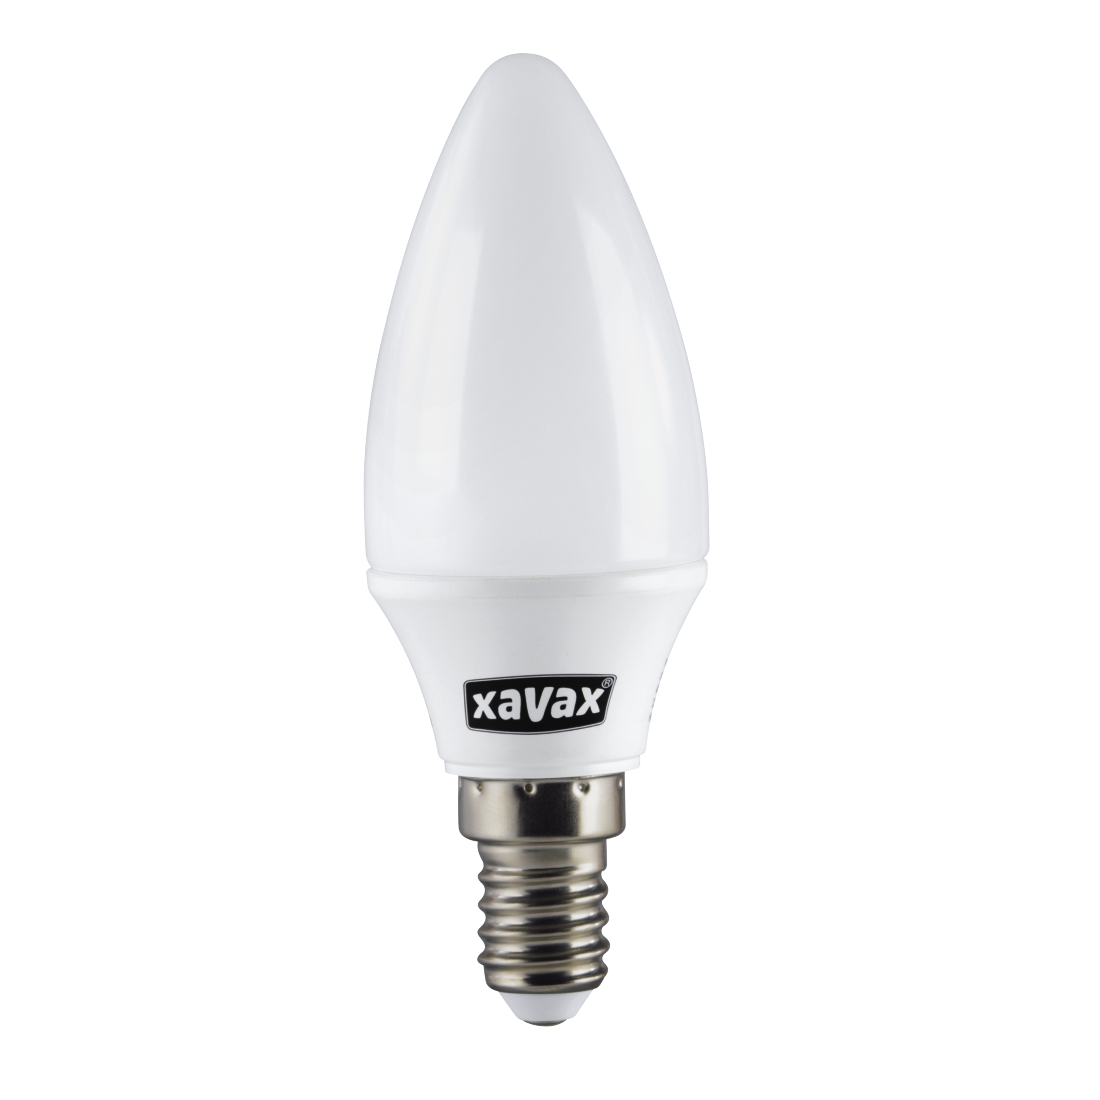 Светодиодные led лампы свеча e14. Xavax led Filament, e14, 250 LM replaces 25 w, Twisted Candle, warm WH.